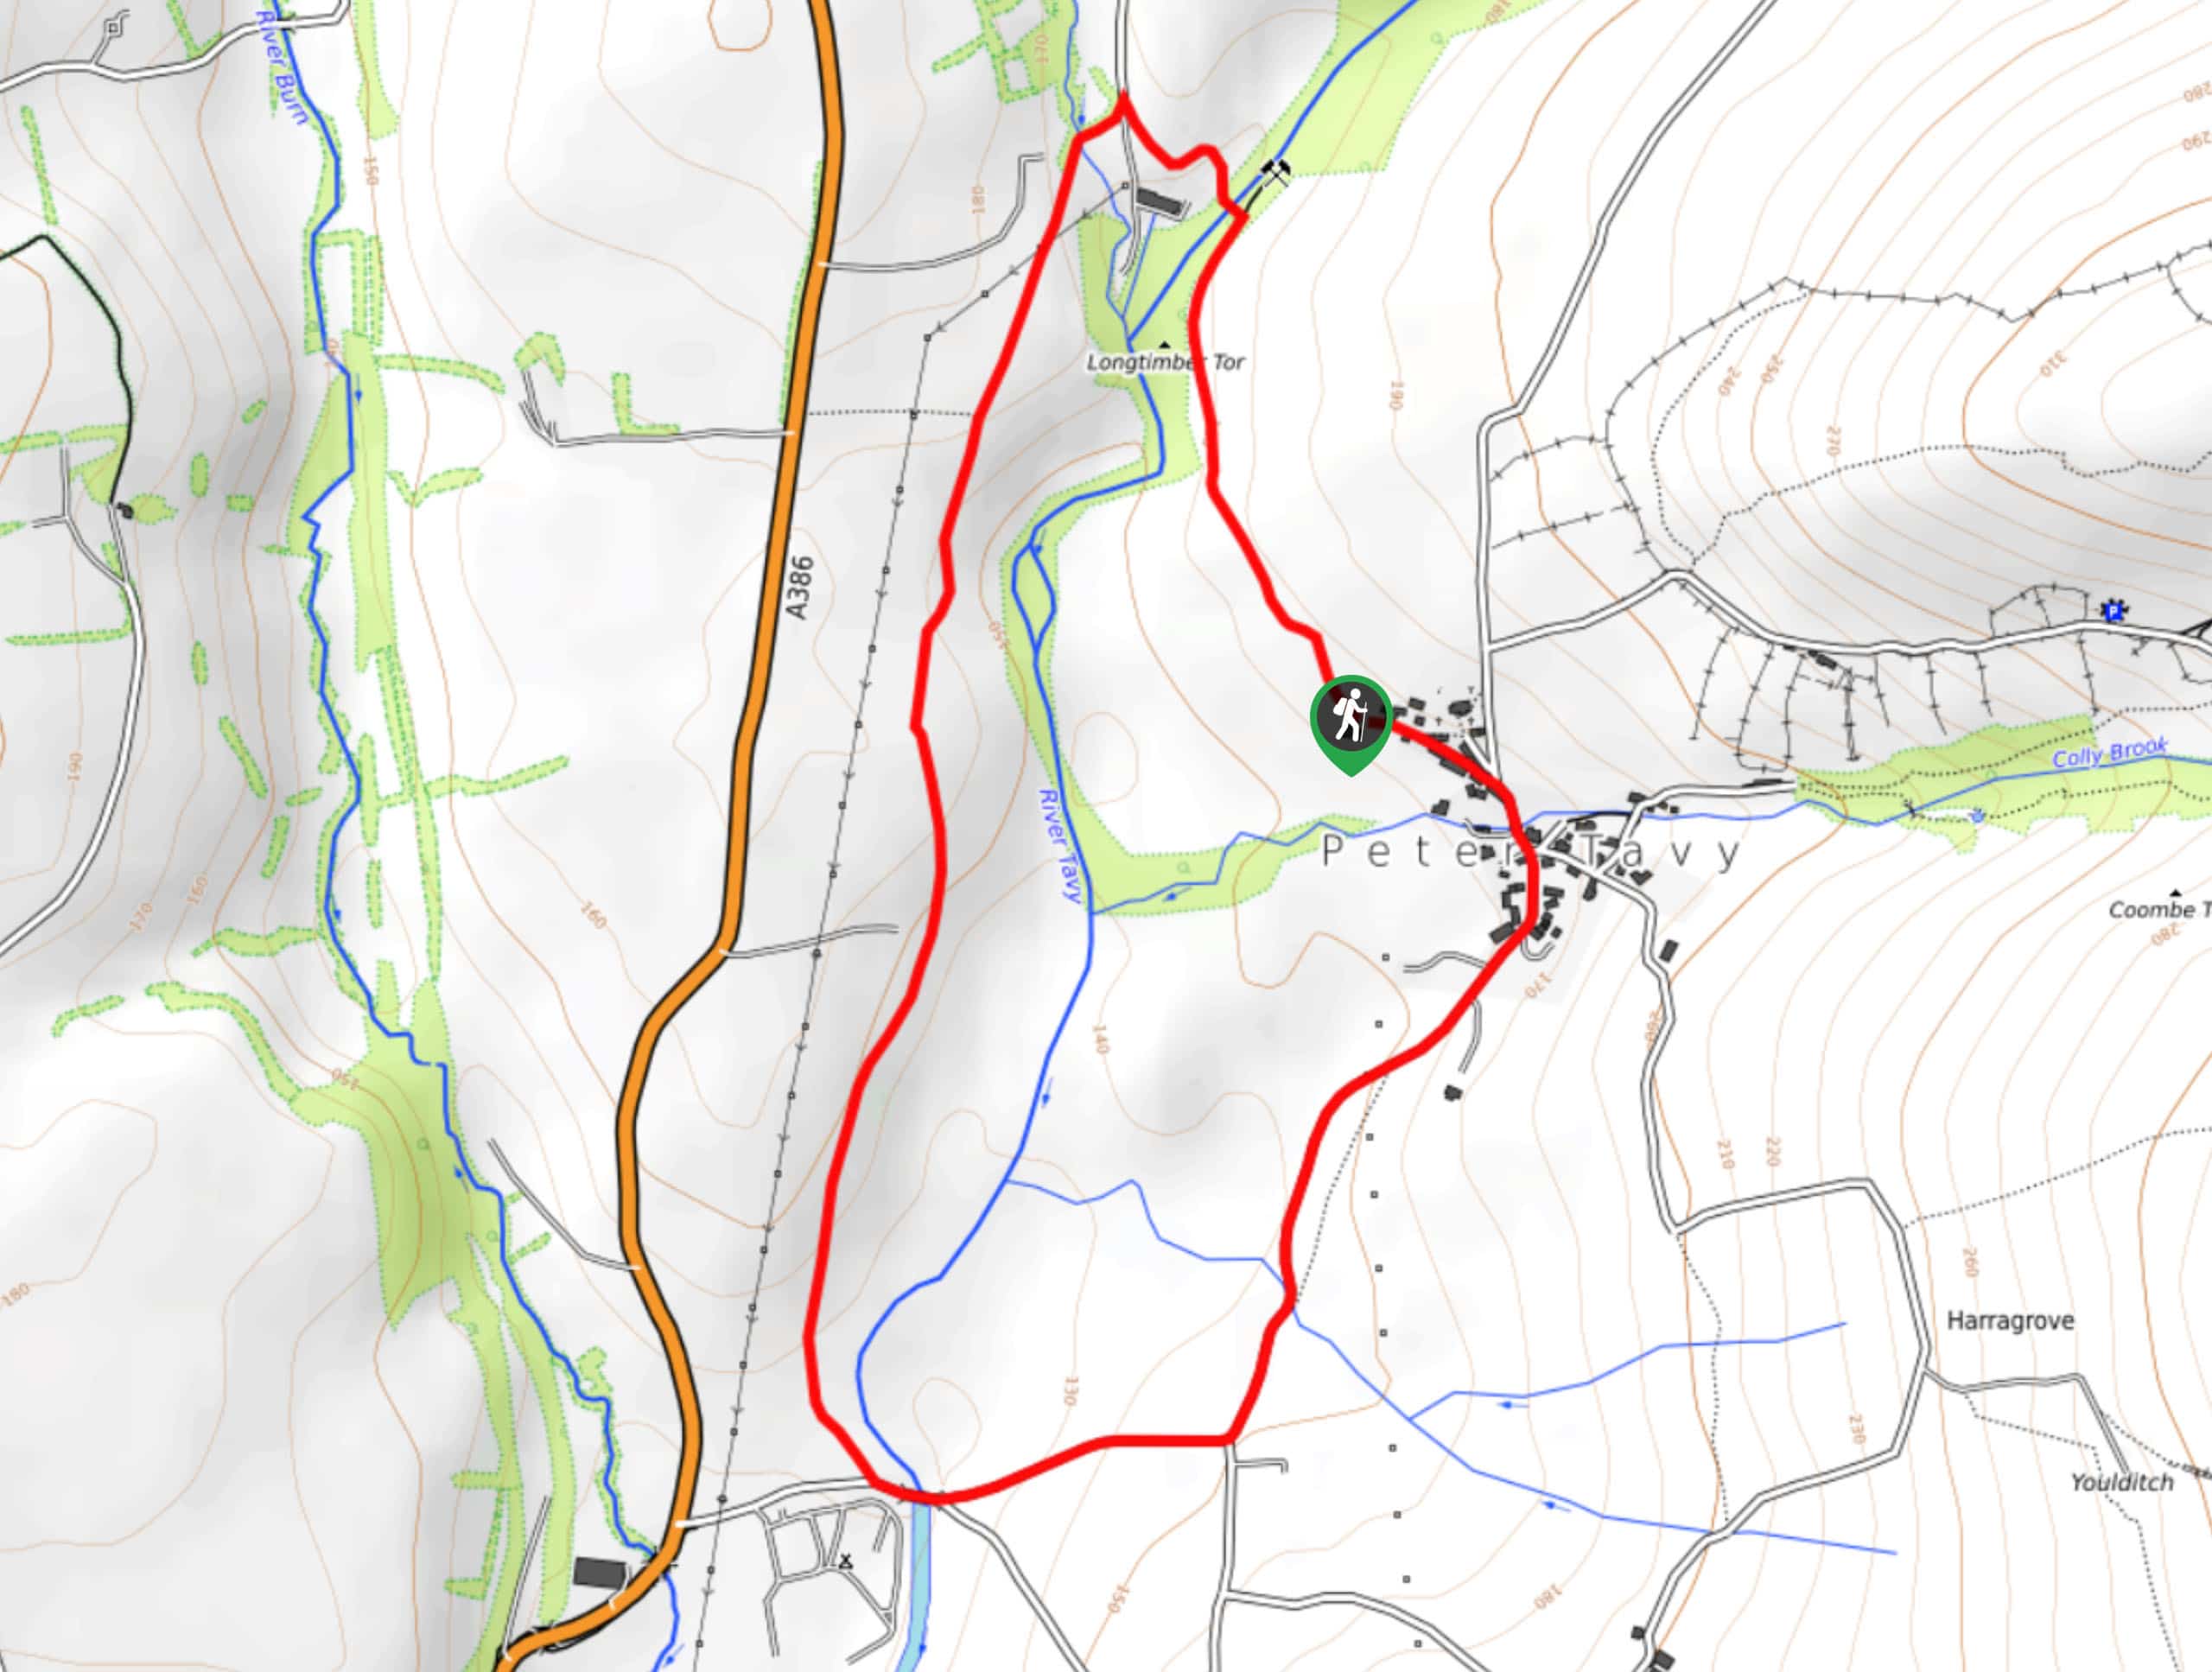 West Devon and Peter Tavy Circular Walk Map